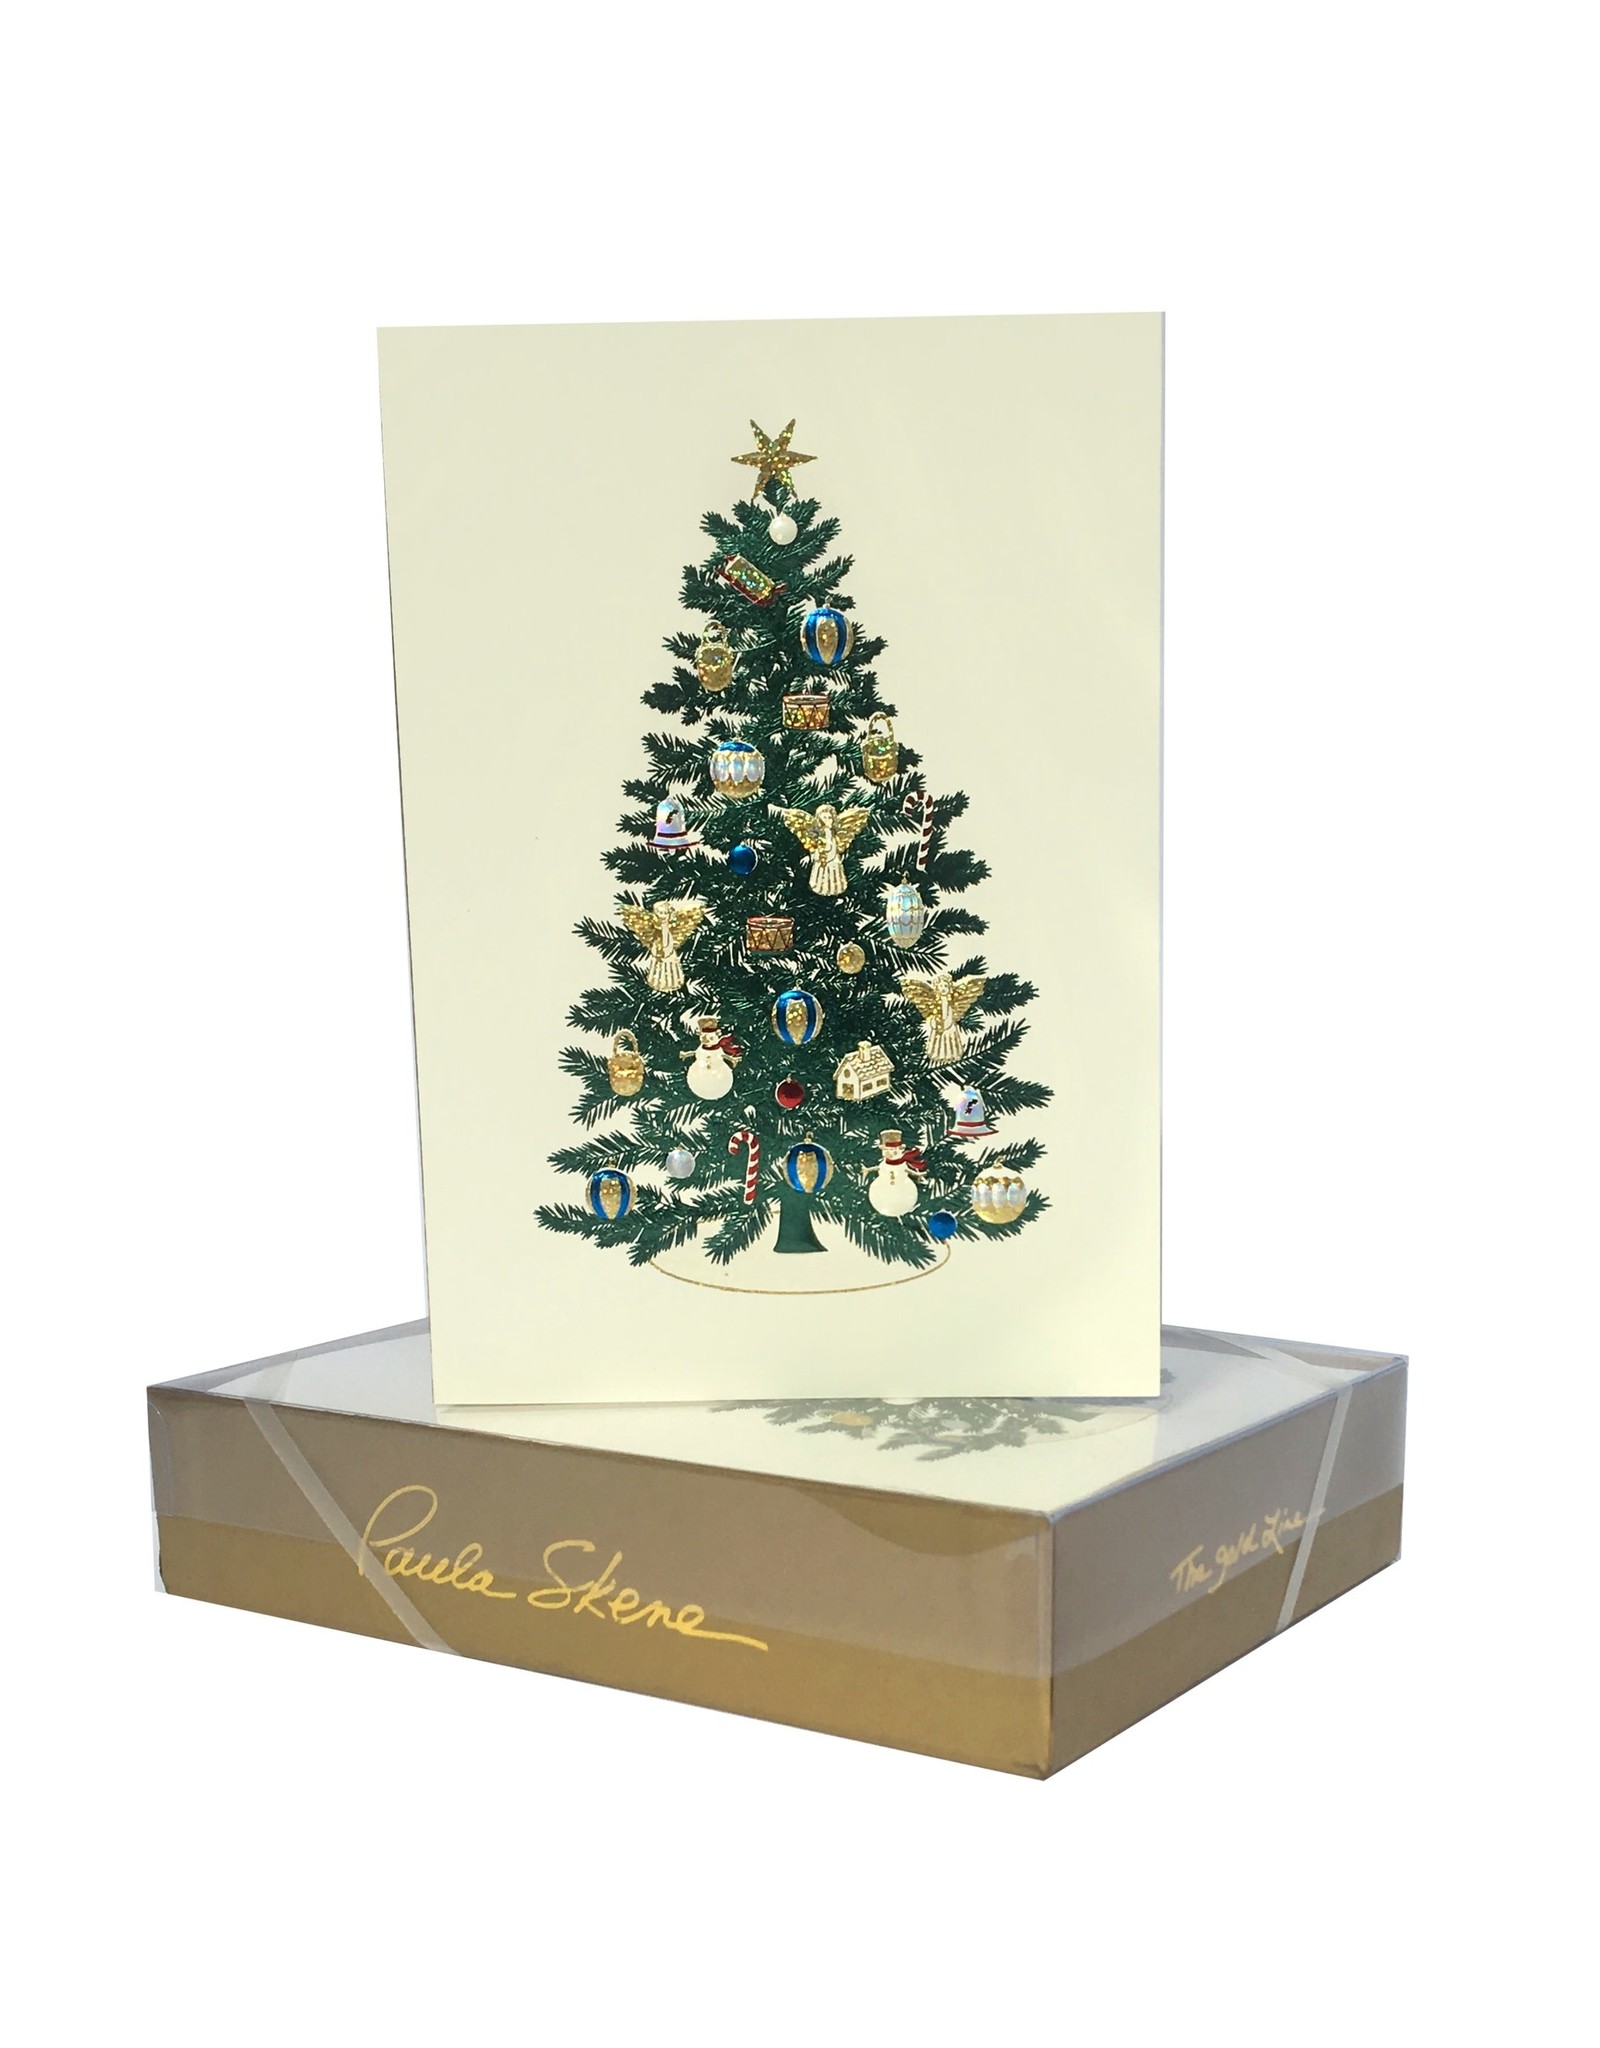 Paula Skene Designs Christmas Tree Box of 8 Notecards